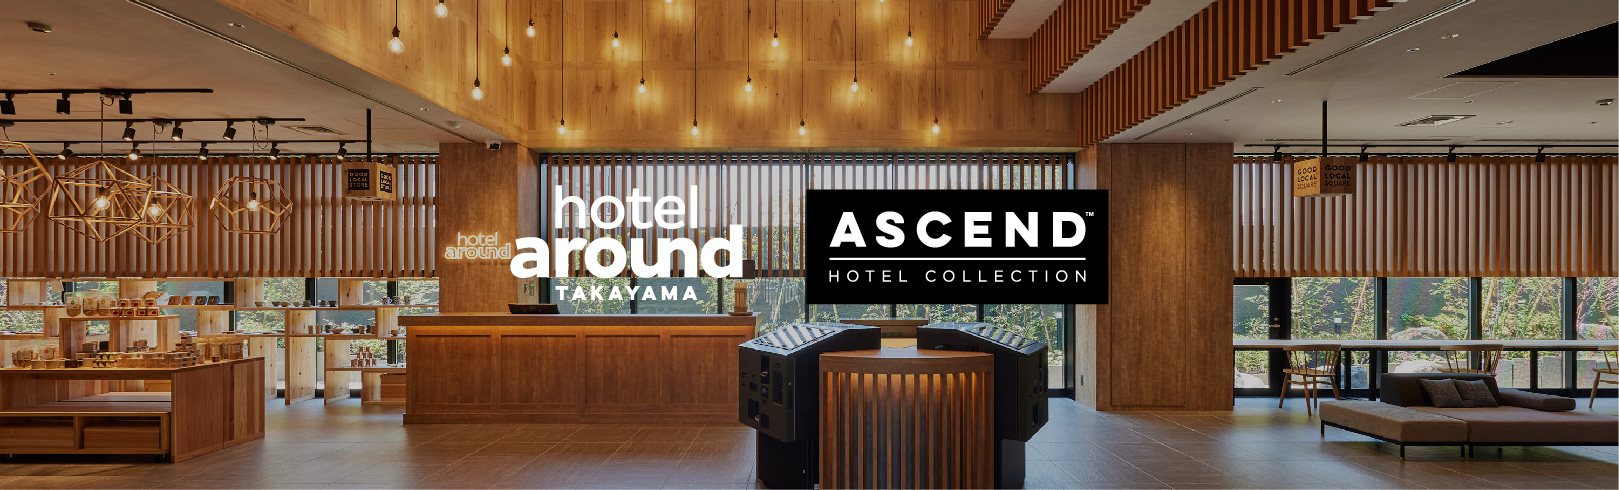 Hotel around TAKAYAMA, Ascend Hotel Collection